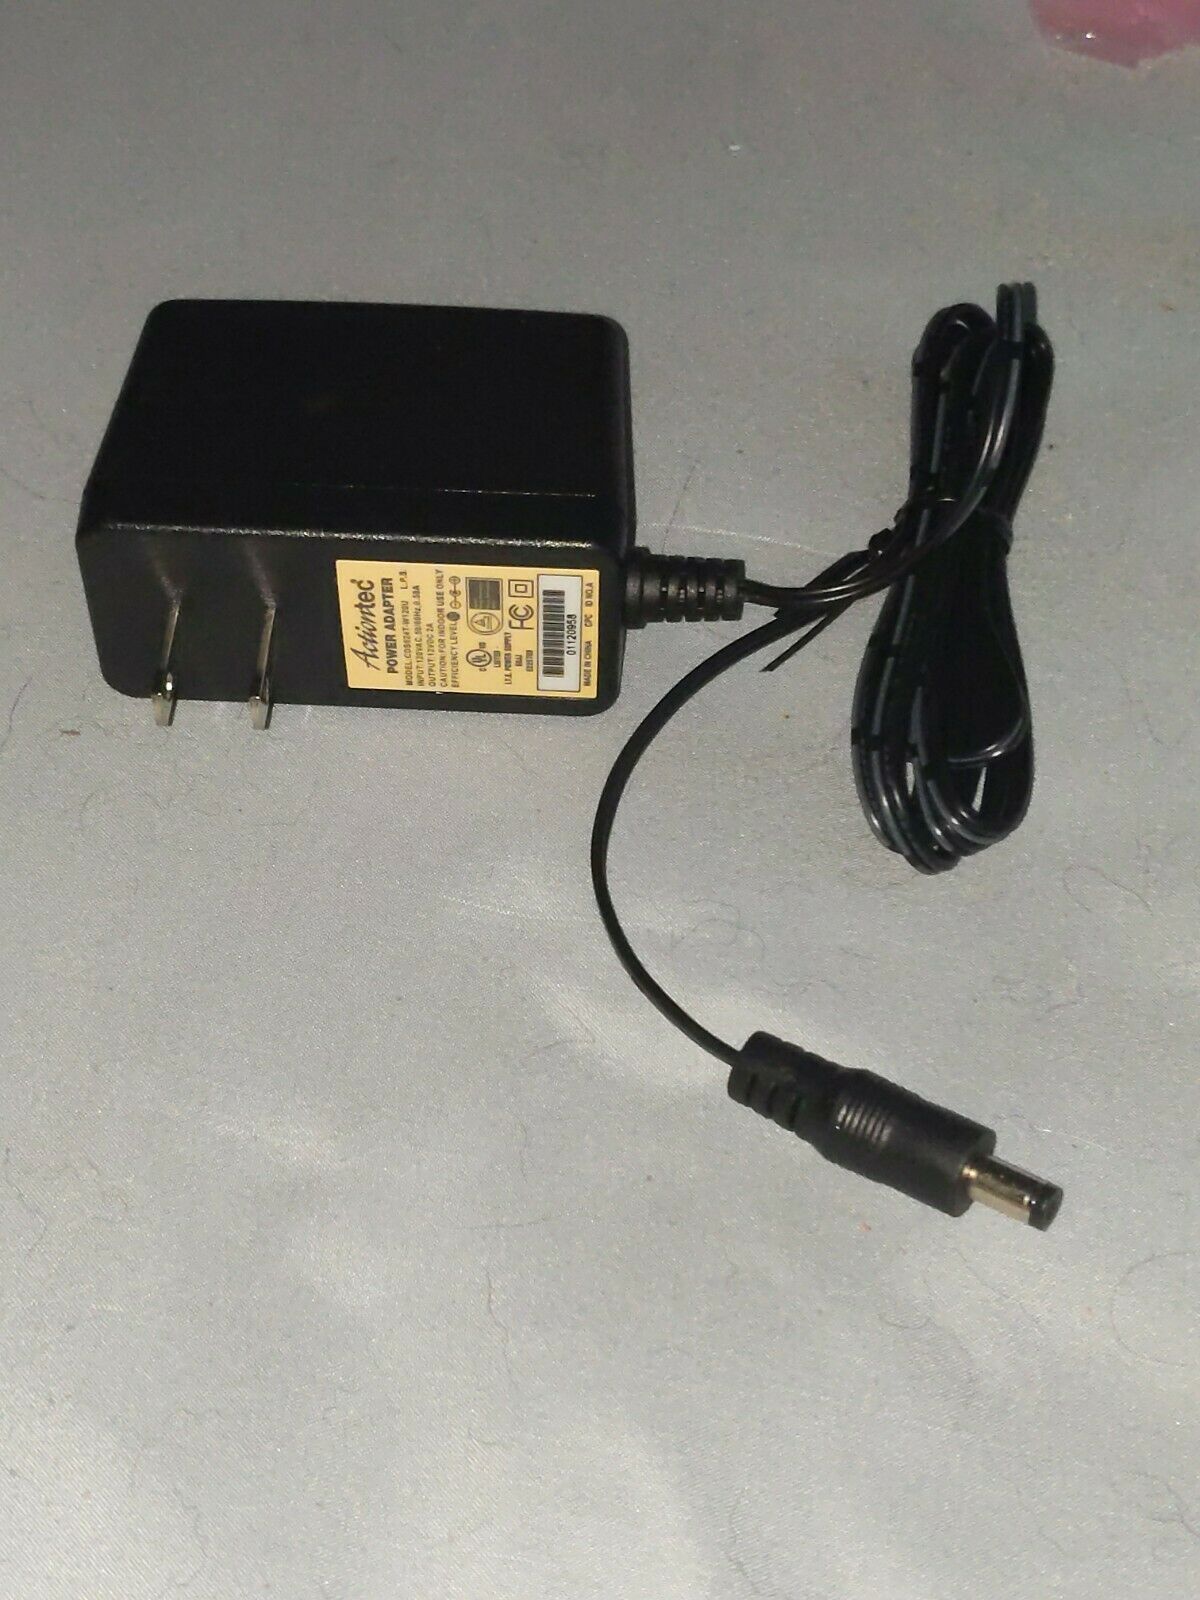 CenturyLink Actiontec C3000a DC Power Supply Adapter Genuine CDS024T-W120U Brand: Action-Tec Type: Adapter Model: